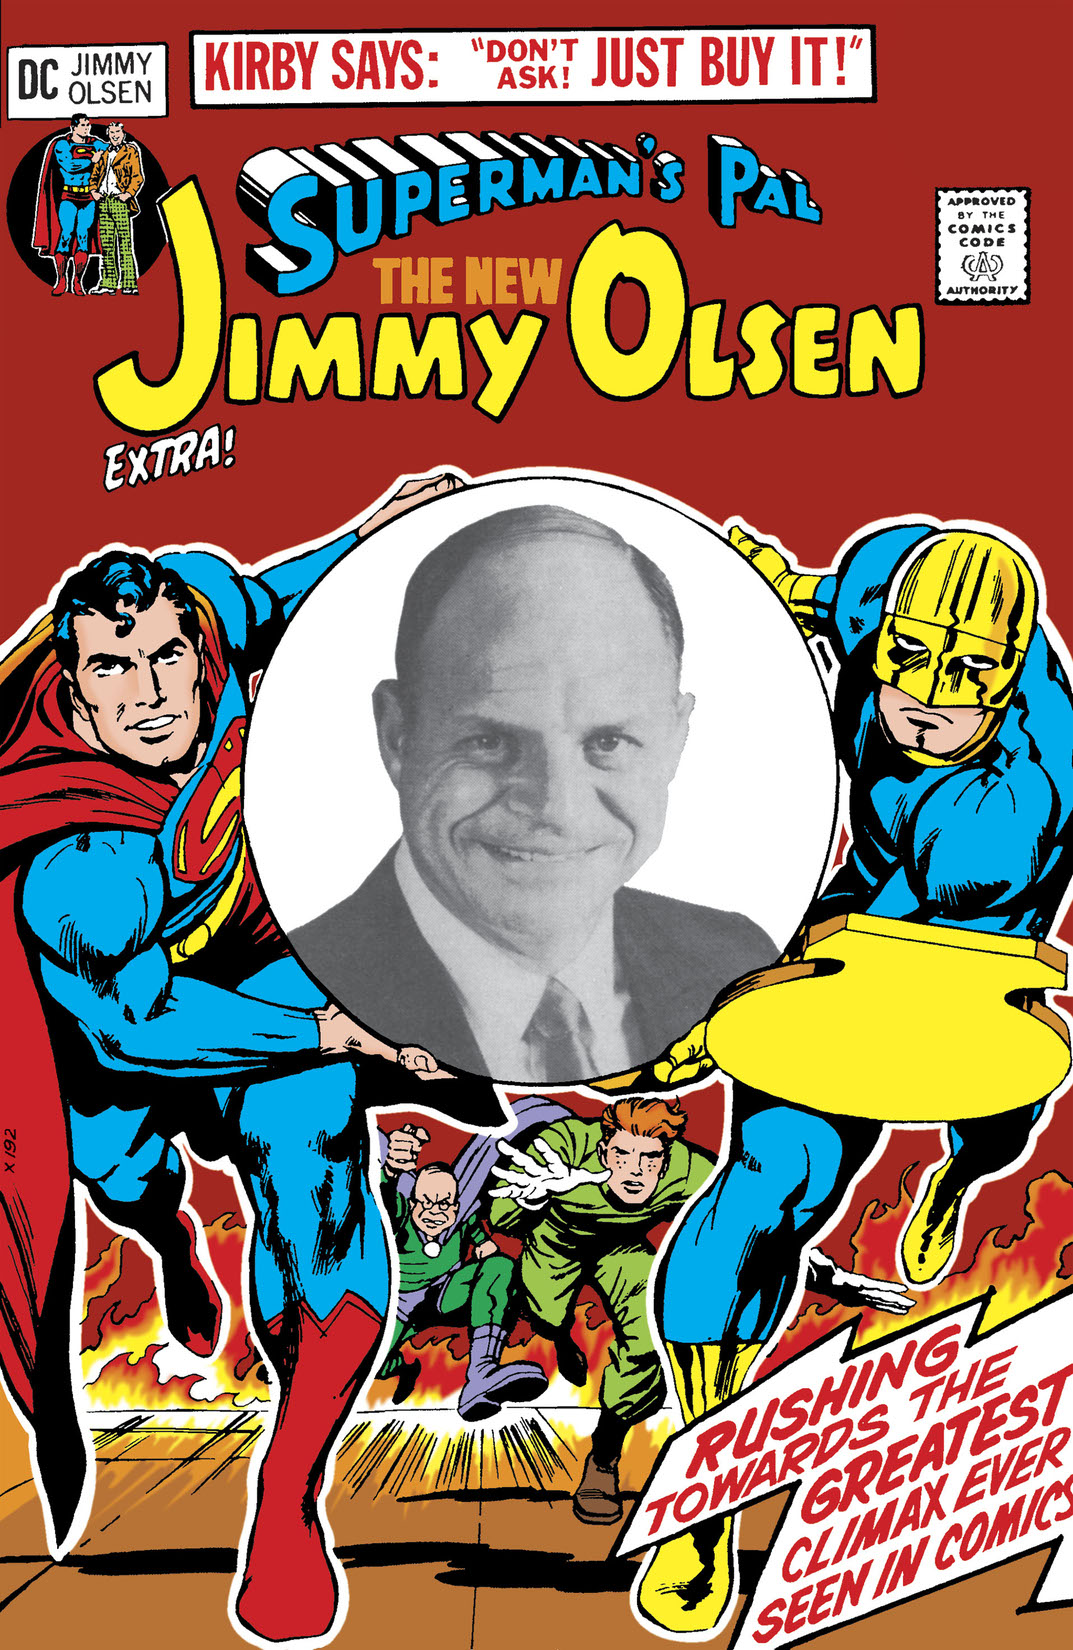 Superman's Pal, Jimmy Olsen #141 preview images